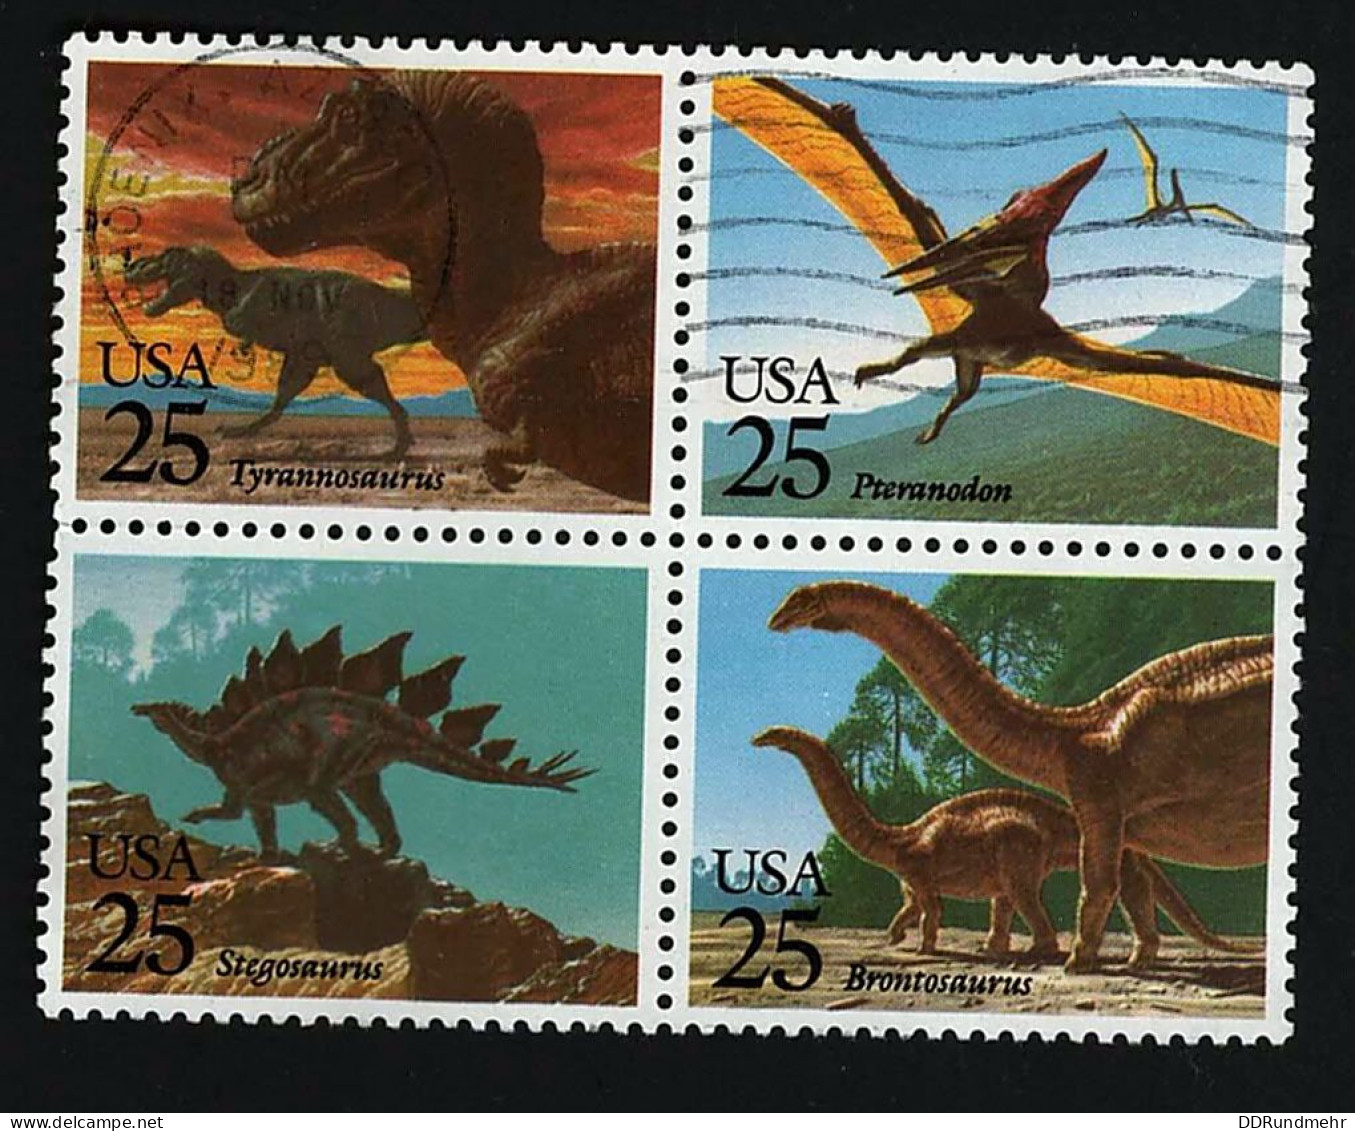 1989 Dinosaurs  Michel US 2051-2054 Stamp Number US 2425b Yvert Et Tellier US 1873-1876 Stanley Gibbons US 2407-241 Used - Gebraucht